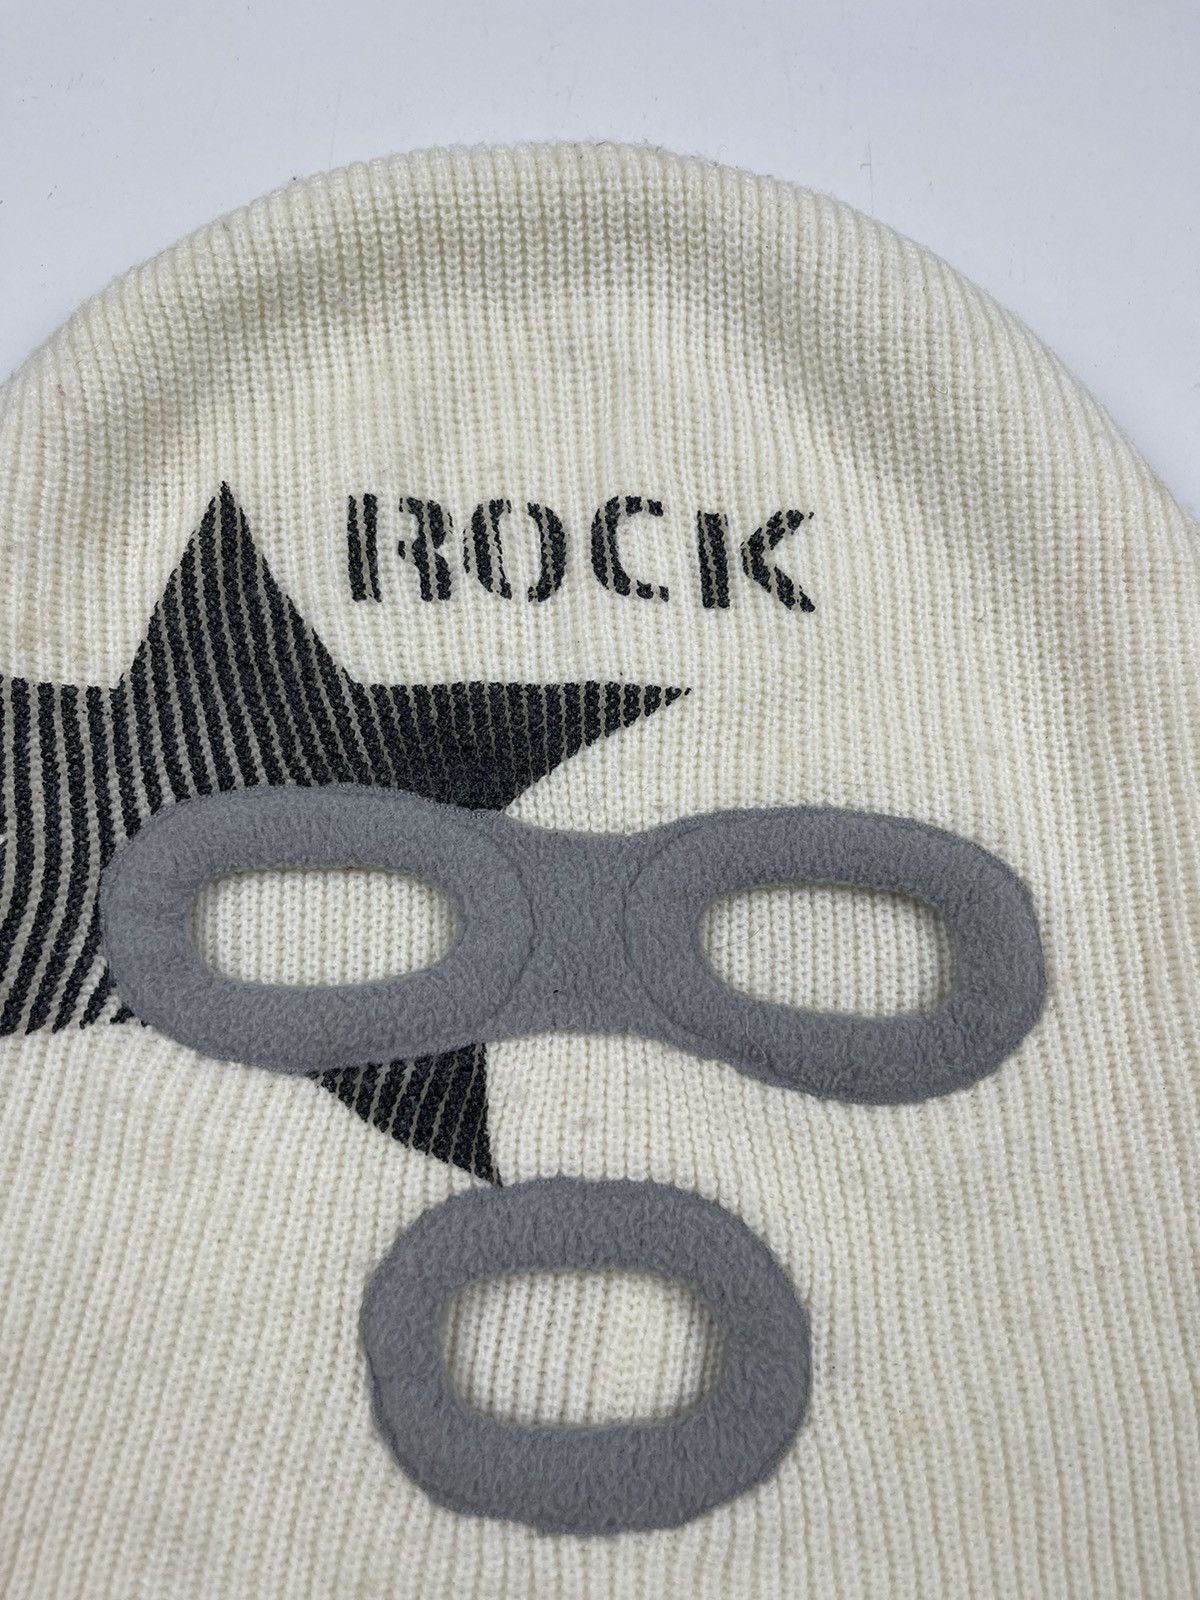 Japanese Brand - rock balaclava ski mask tc14 - 7